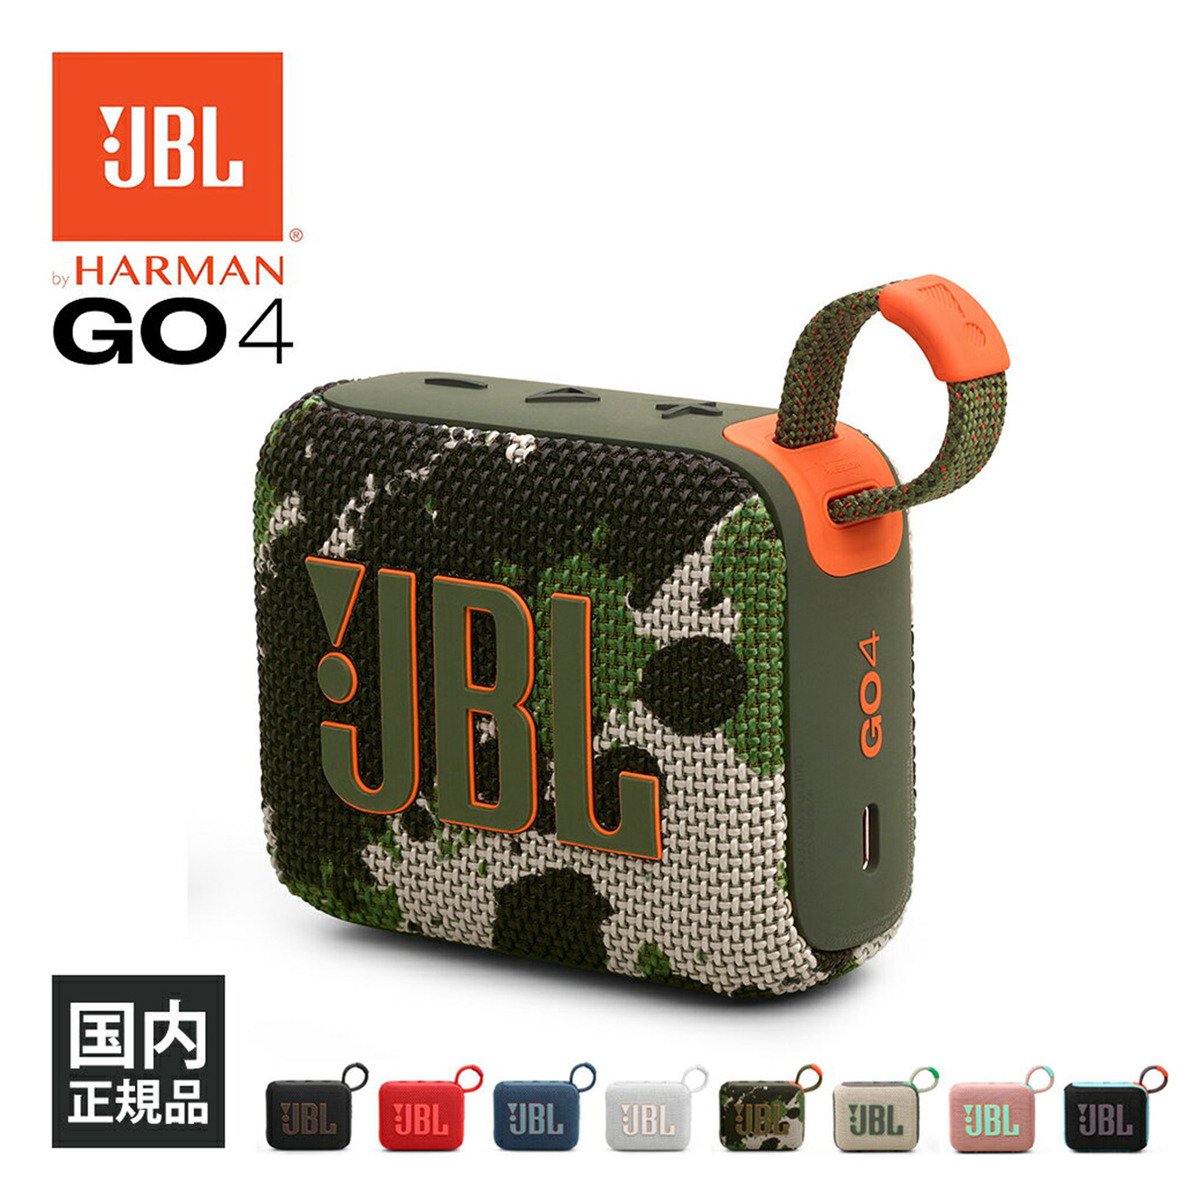 JBL Go 4 Portable Bluetooth Speaker, Squad